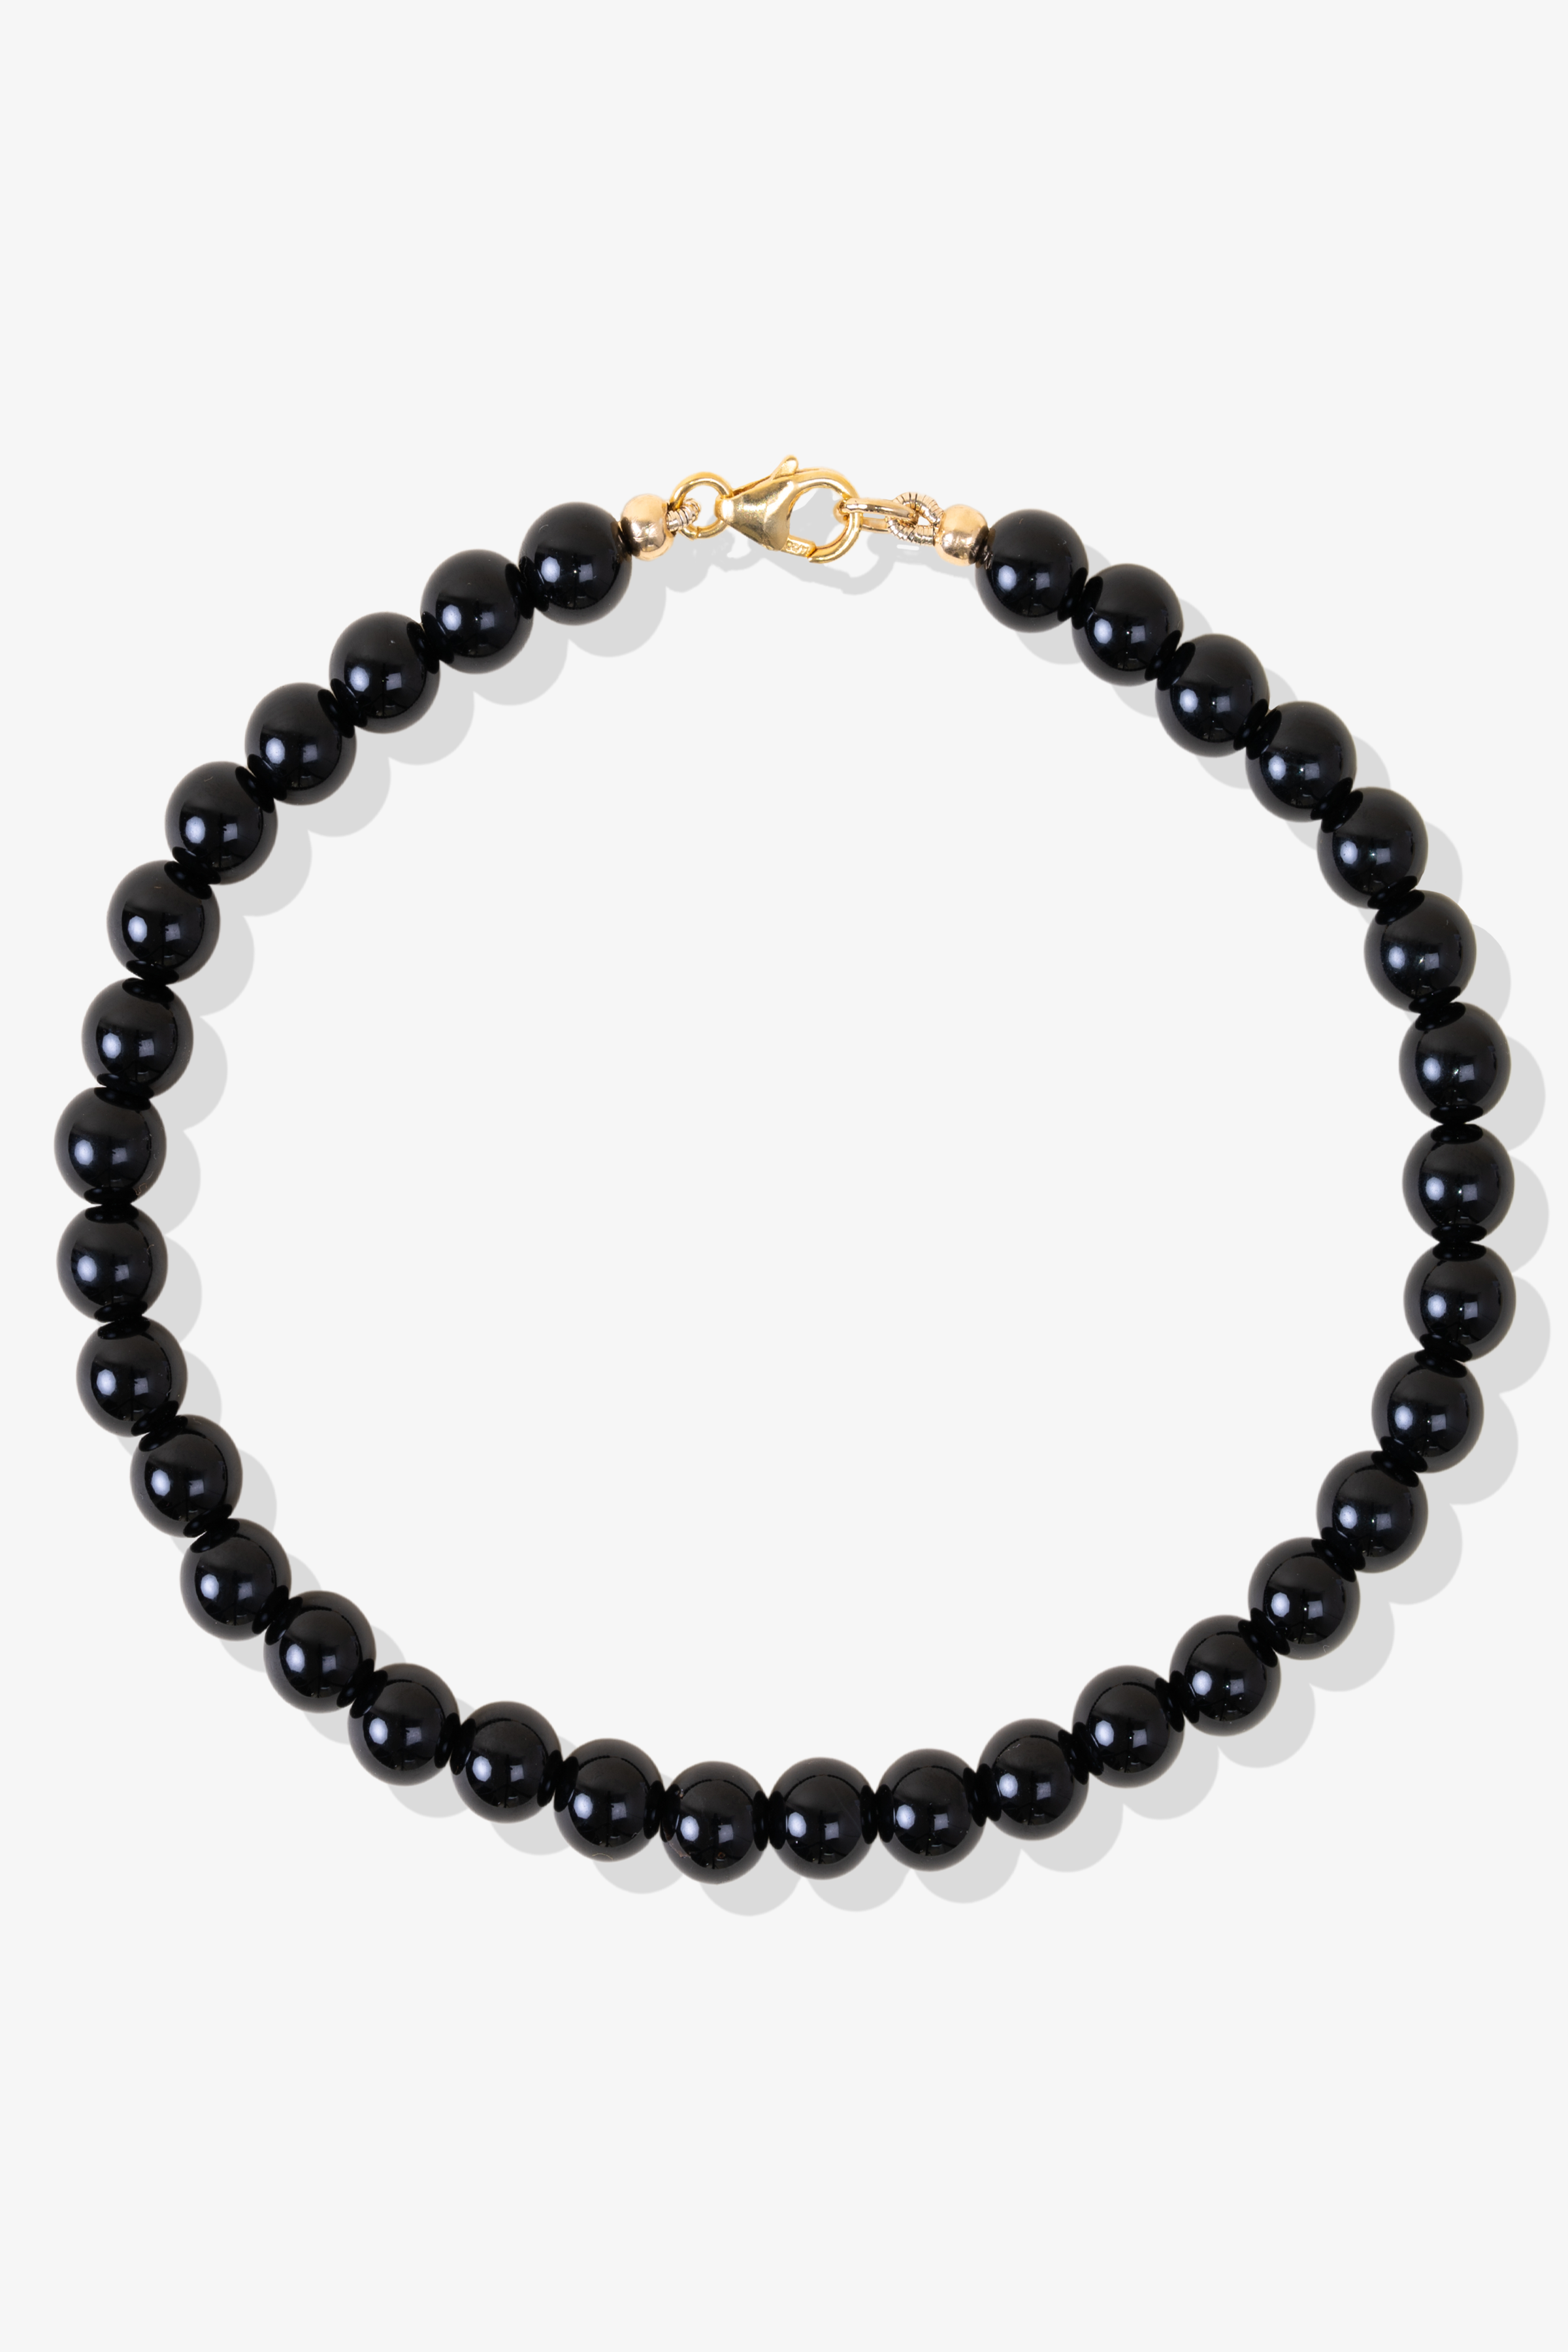 Black Onyx Bracelet - Protection